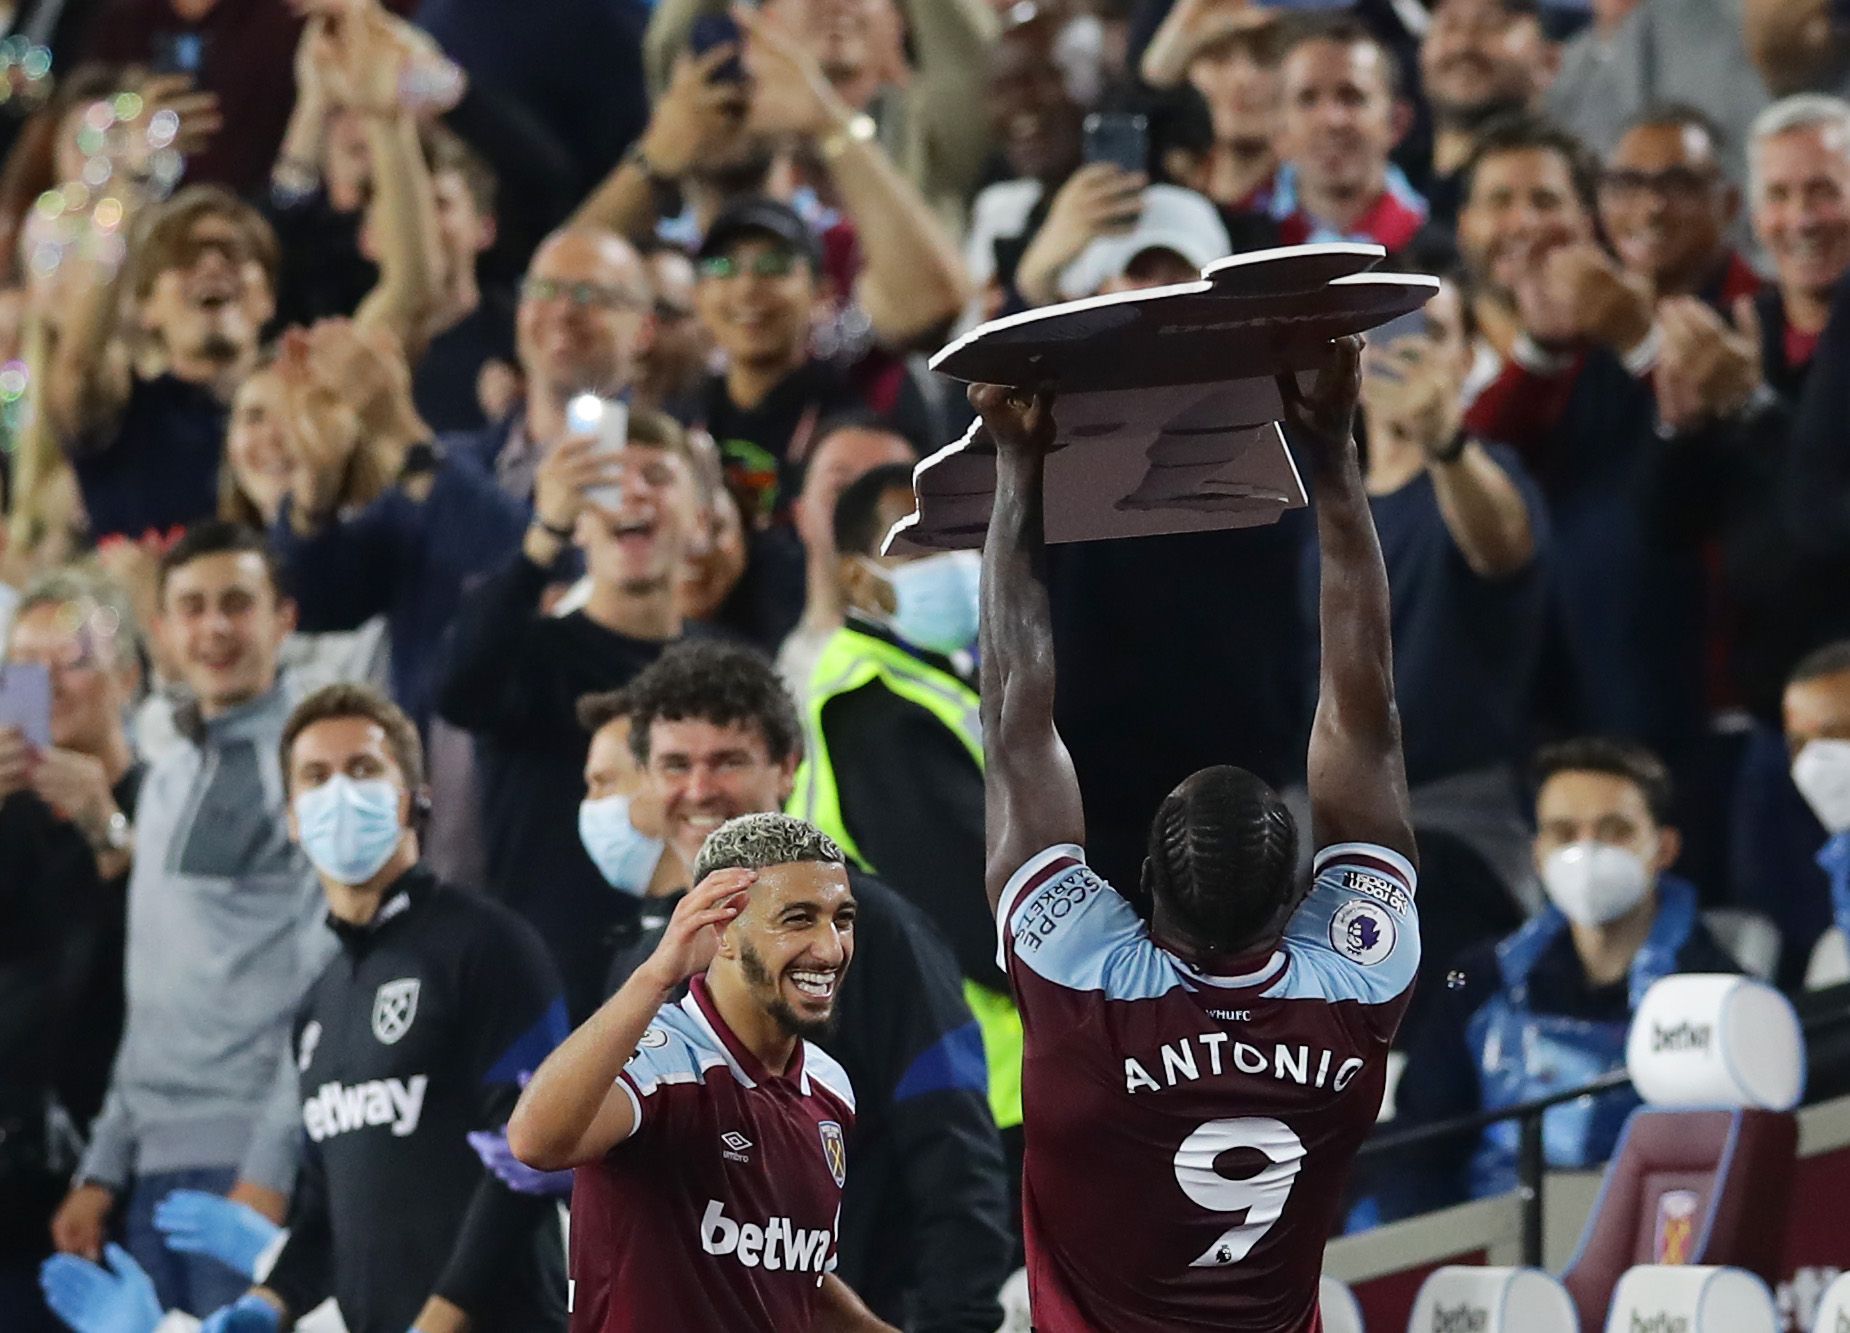 2. kolo anglické fotbalové ligy 2020/21, West Ham - Leicester: Michail Antonio slaví gól West Hamu na 3:1